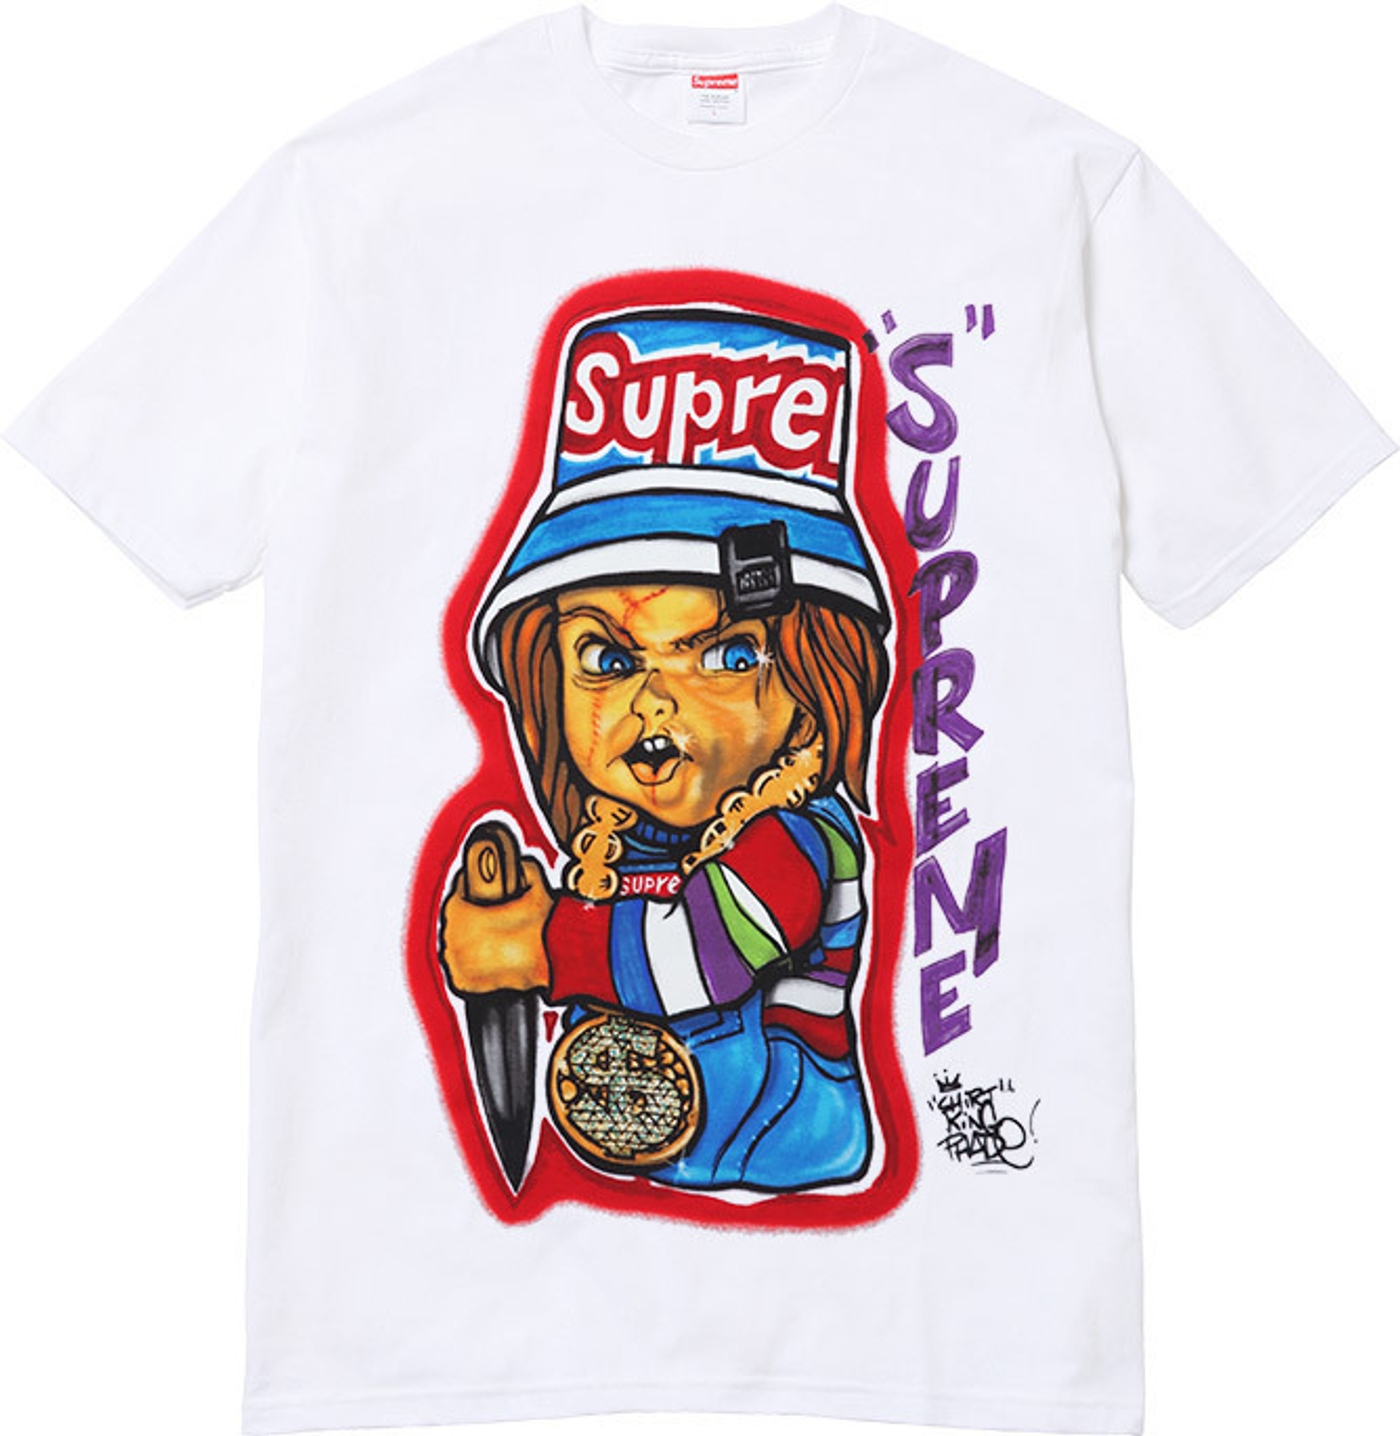 All cotton classic Supreme t-shirt. 
Original artwork by Shirt King Phade for Supreme. (24/26)